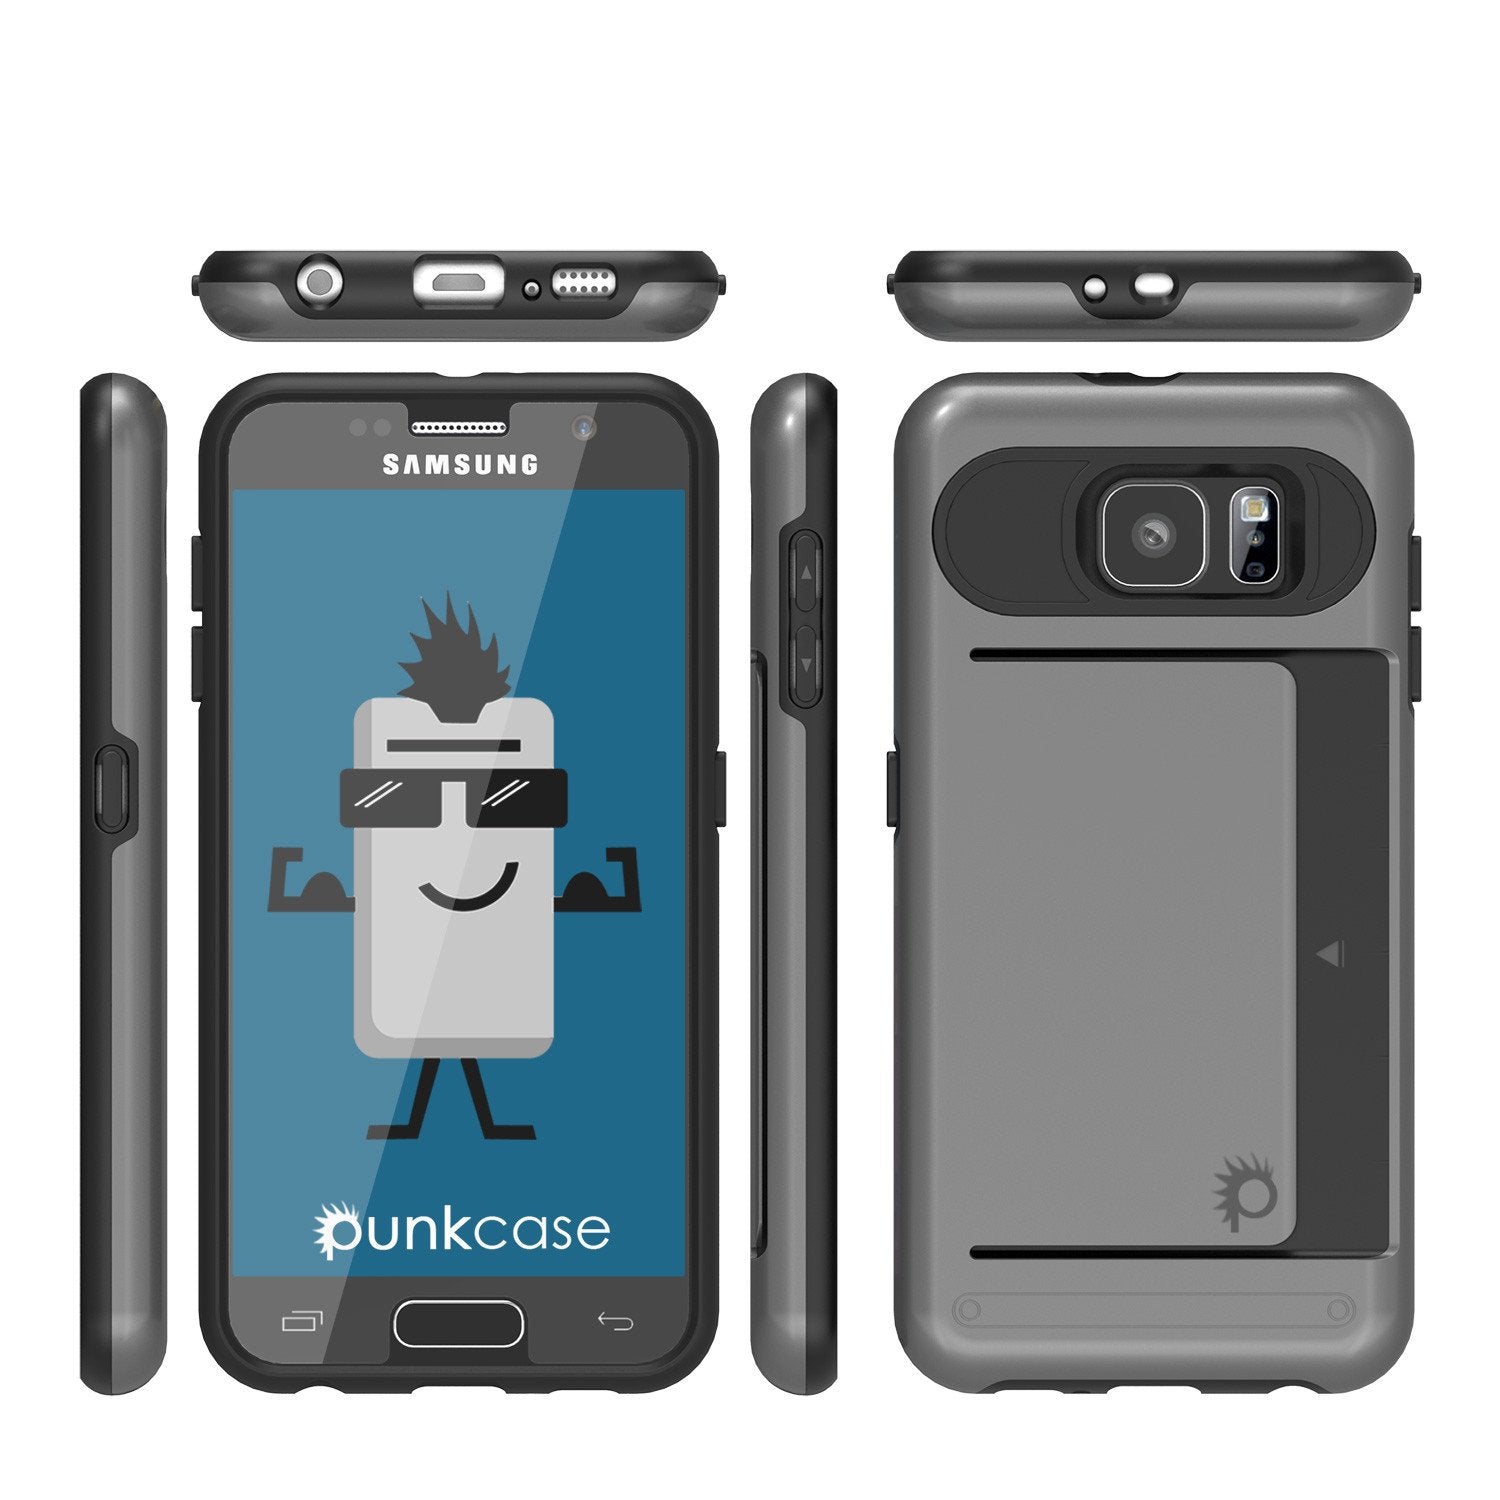 Galaxy S6 EDGE Case PunkCase CLUTCH Grey Series Slim Armor Soft Cover Case w/ Screen Protector - PunkCase NZ